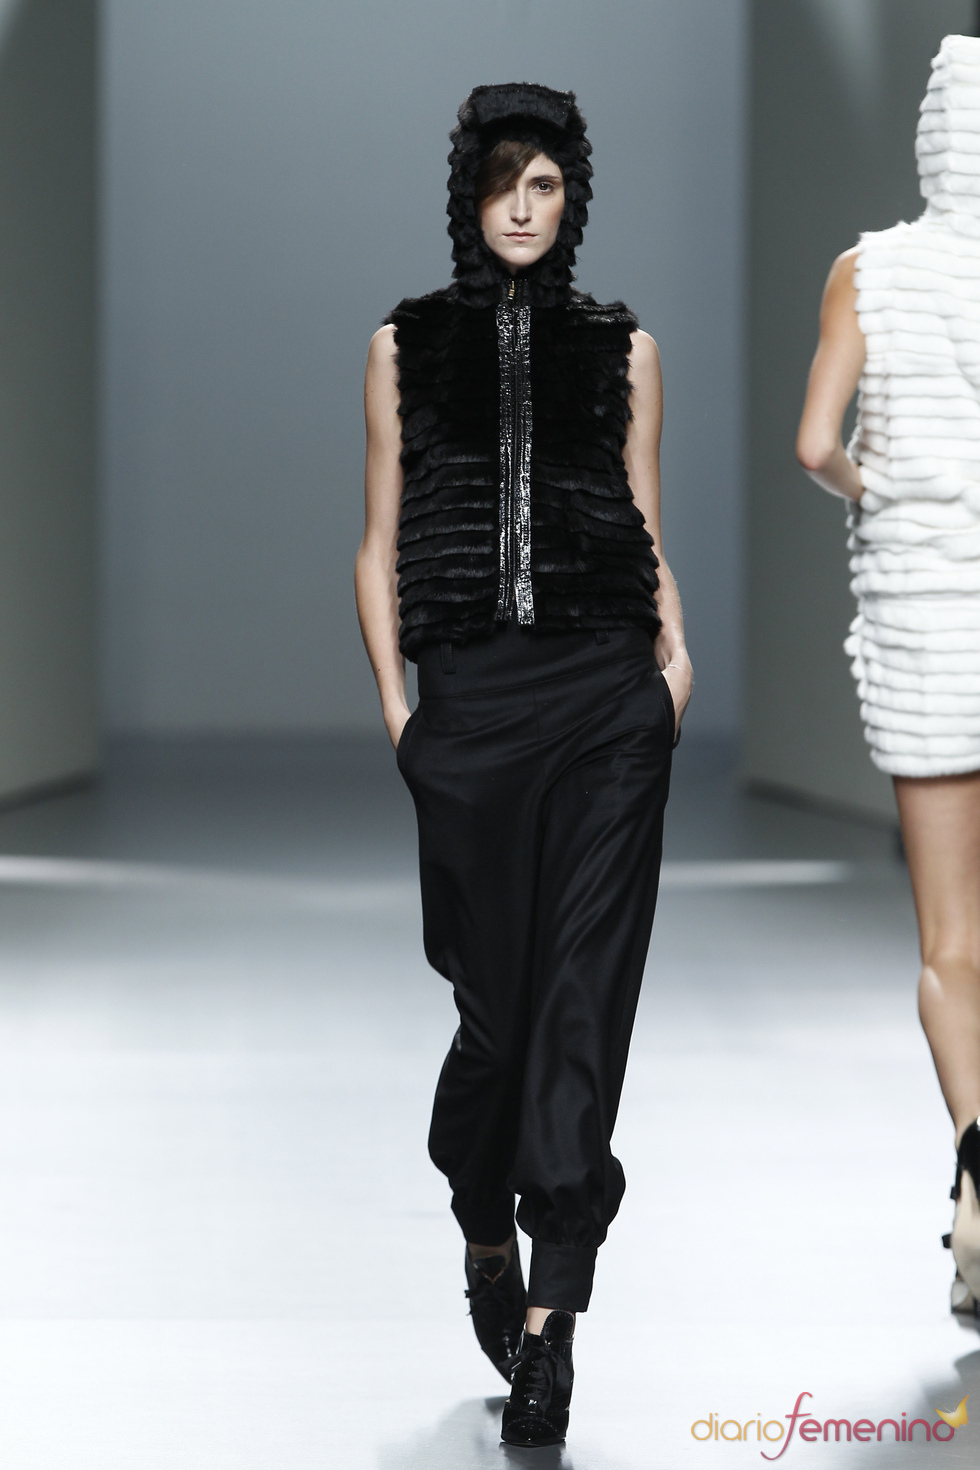 Chaleco negro con capucha.Teresa Helbig O/I 2011-12. Cibeles Madrid Fashion Week